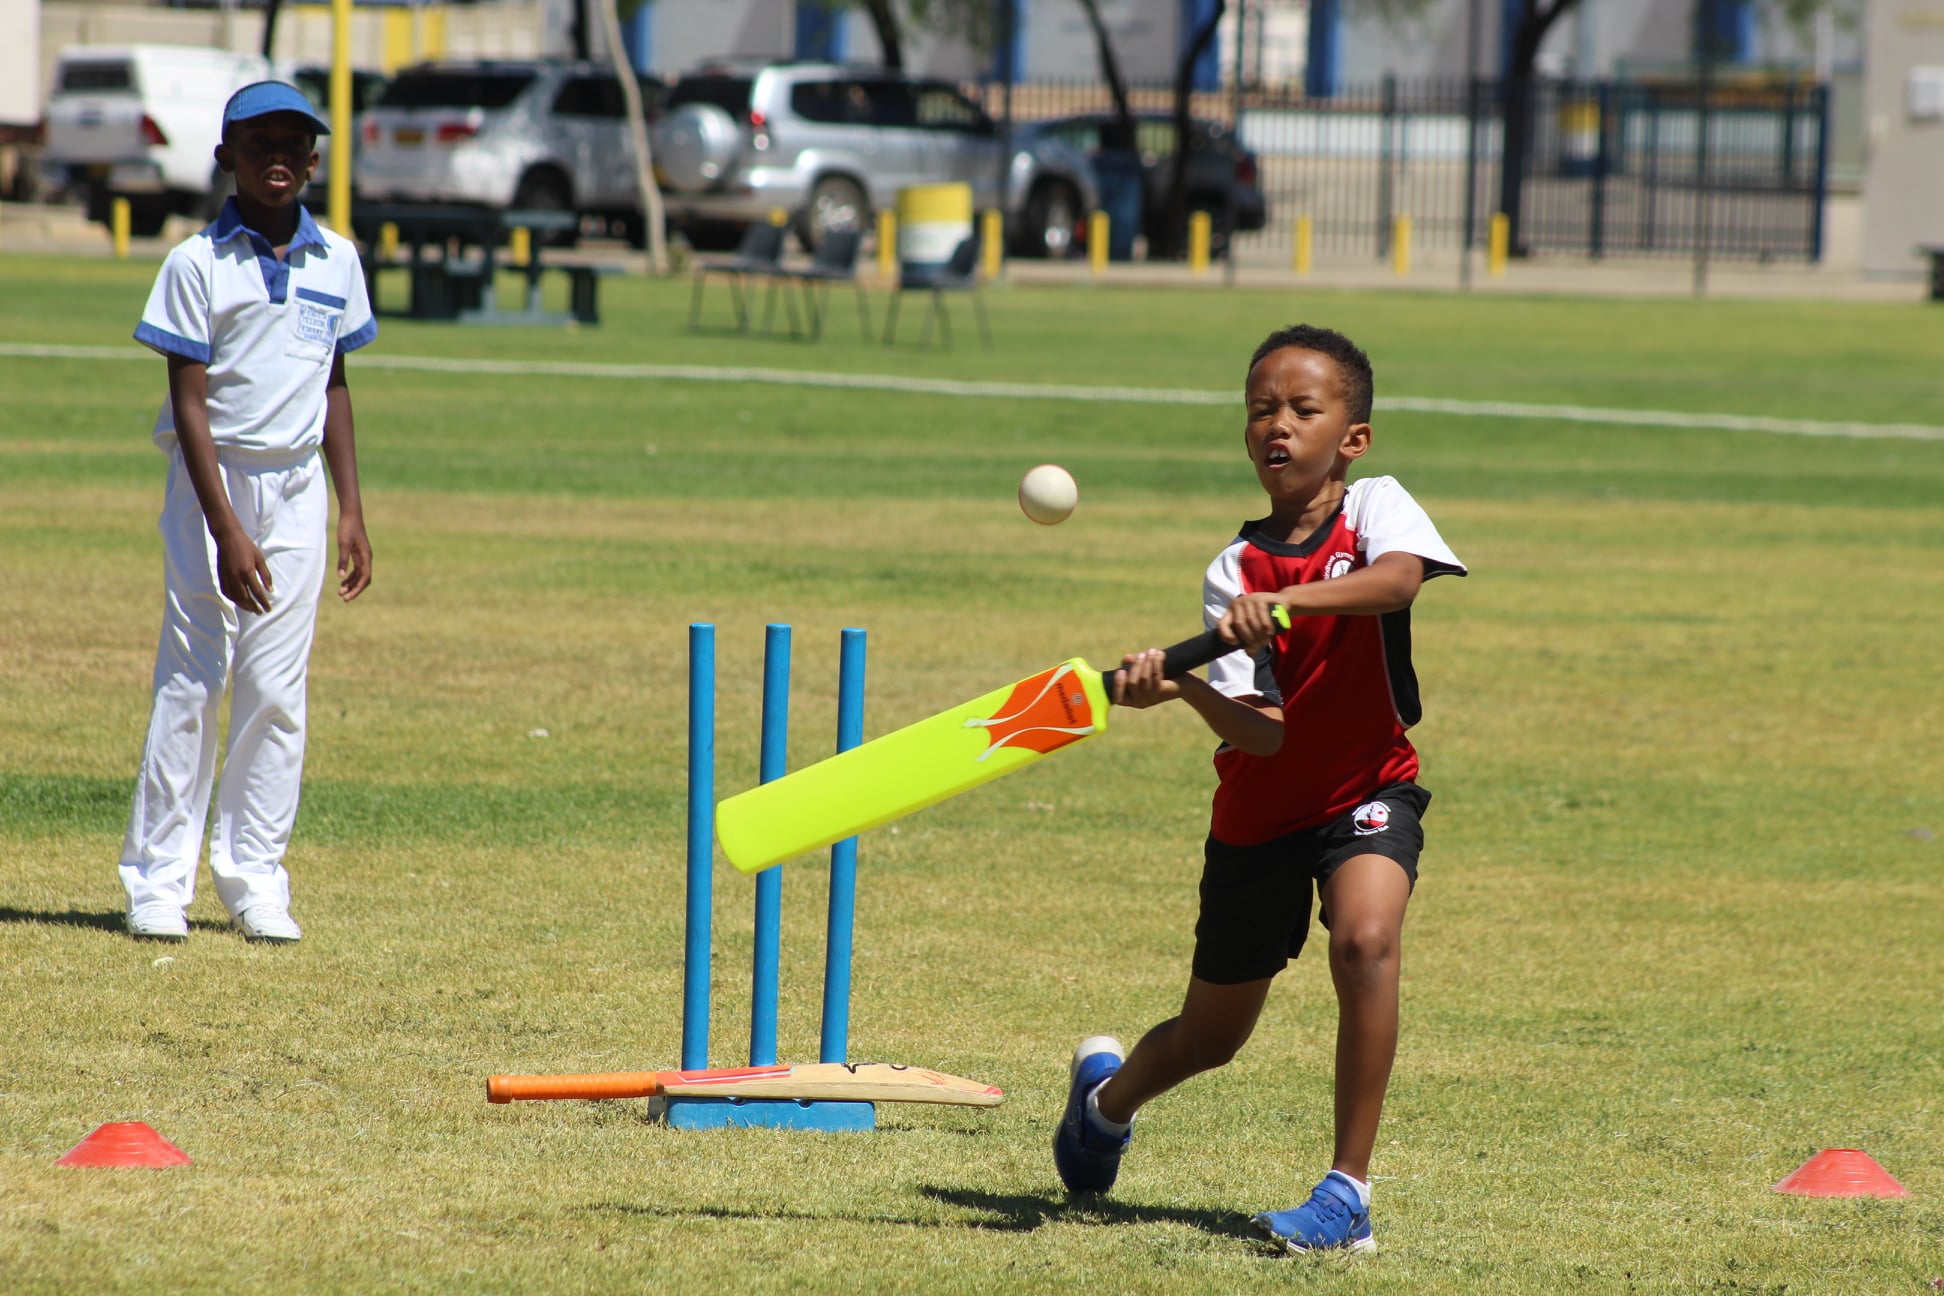 Junior cricket tourney providing rare opportunities